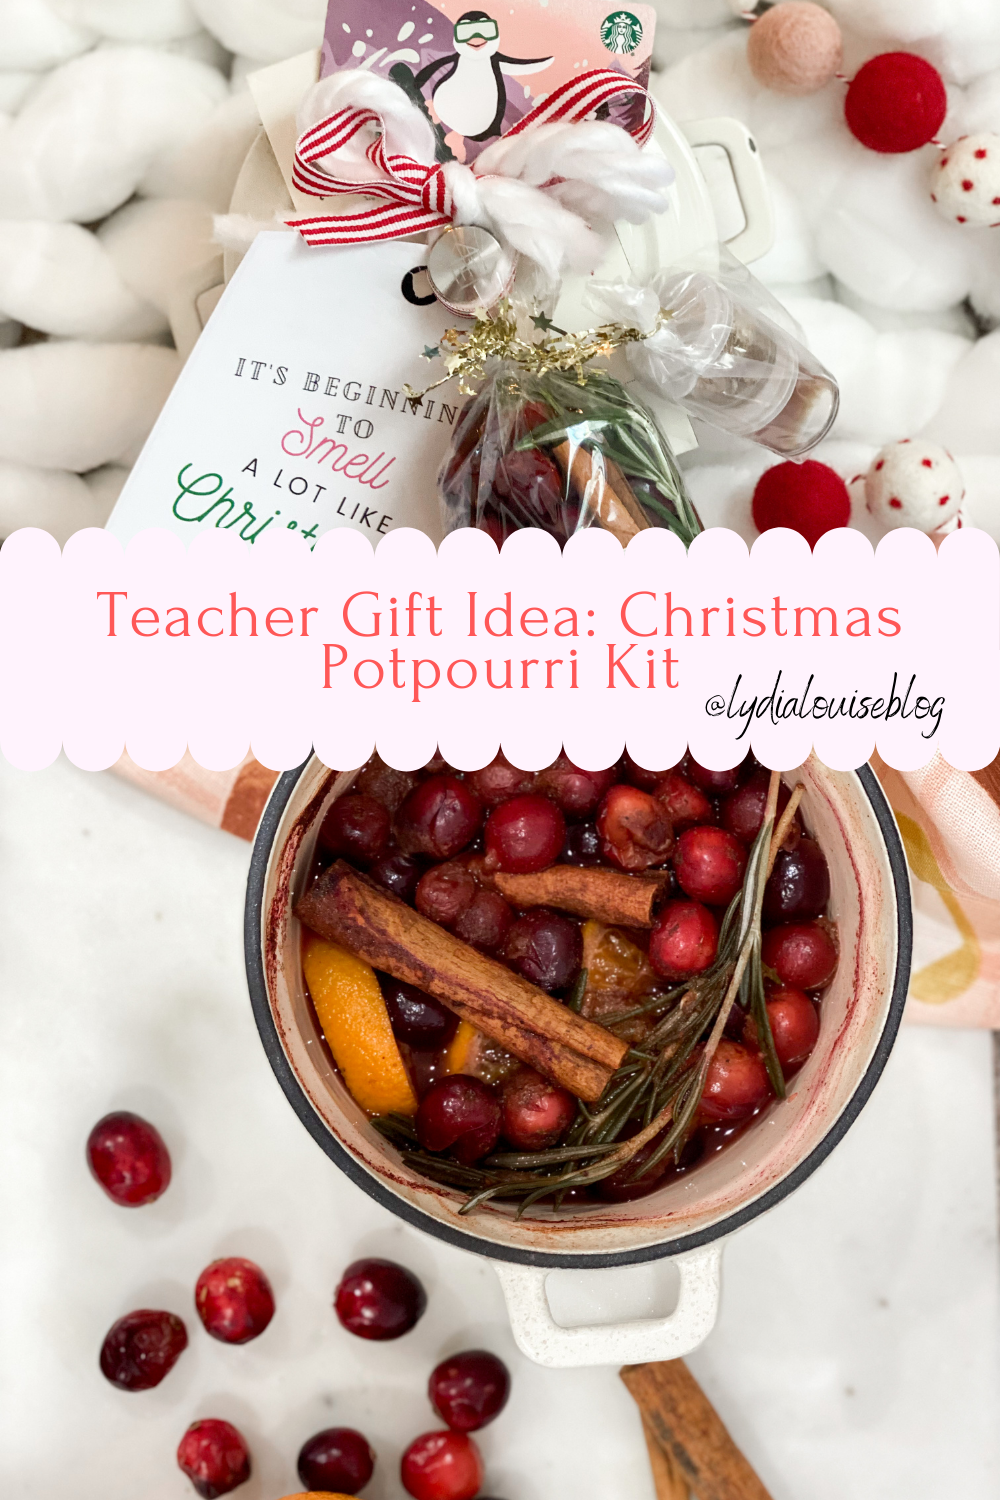 Teacher Gift: Mini Simmering Stove Top Christmas Potpourri